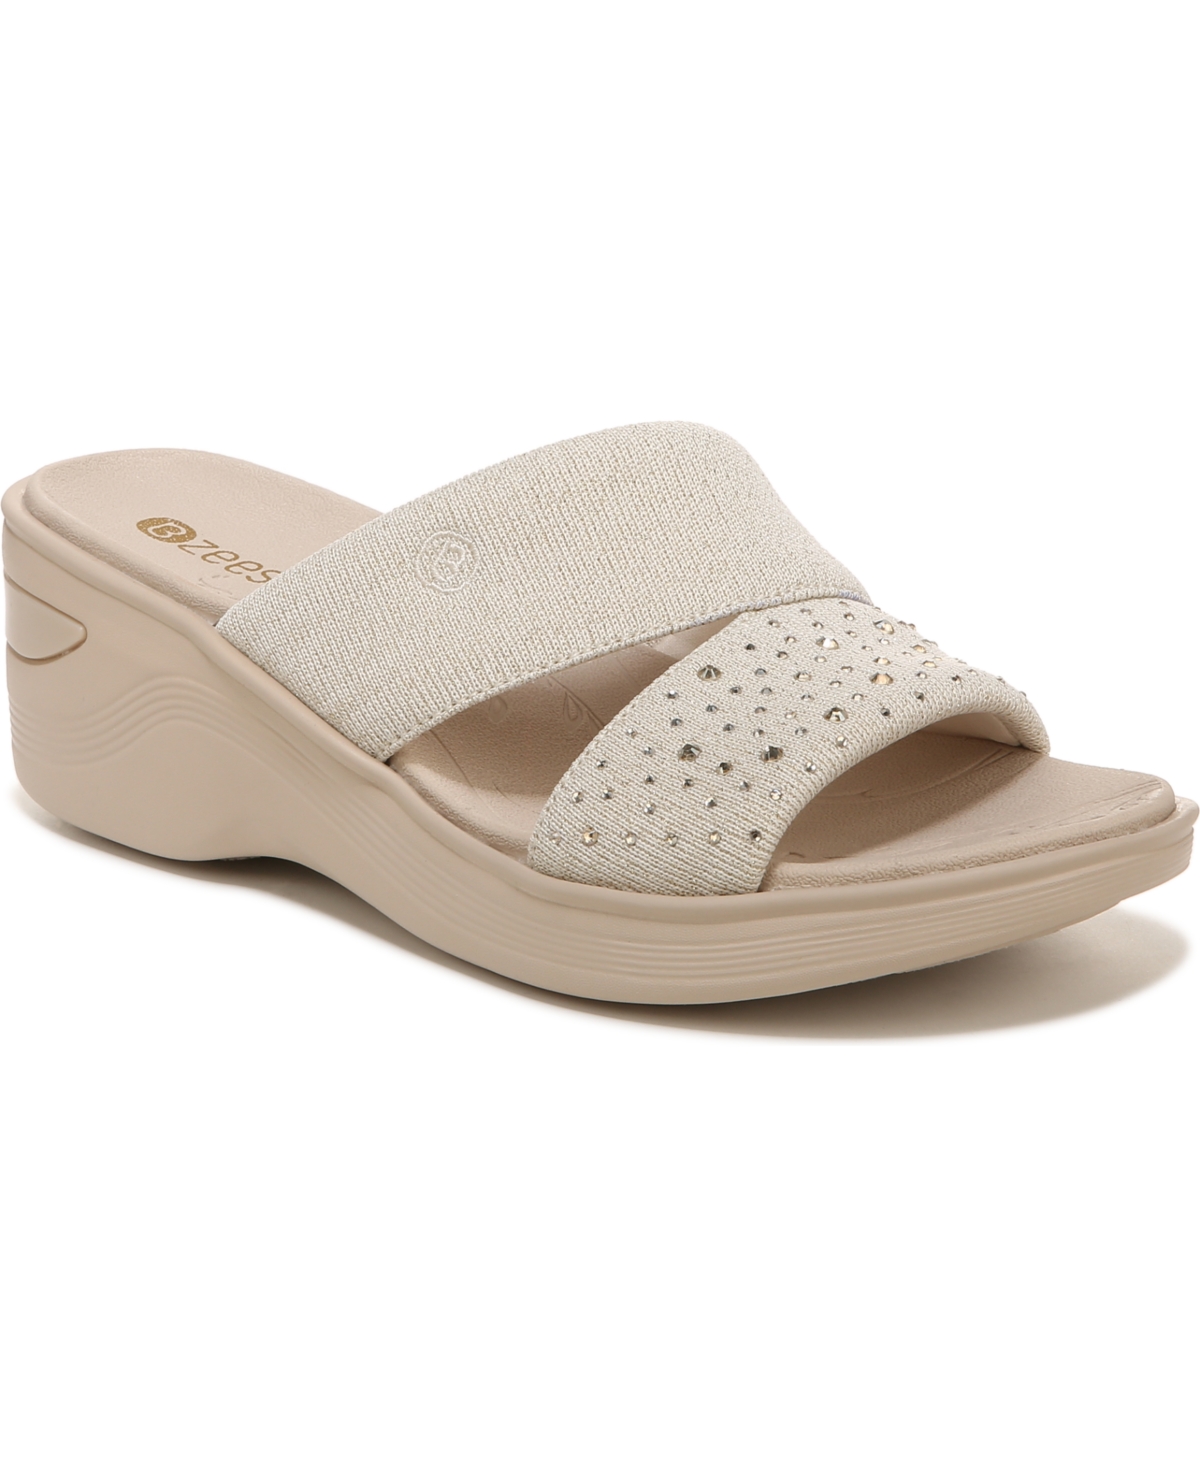 BZees Dynasty-Bright Washable Slide Sandals Women's Shoes